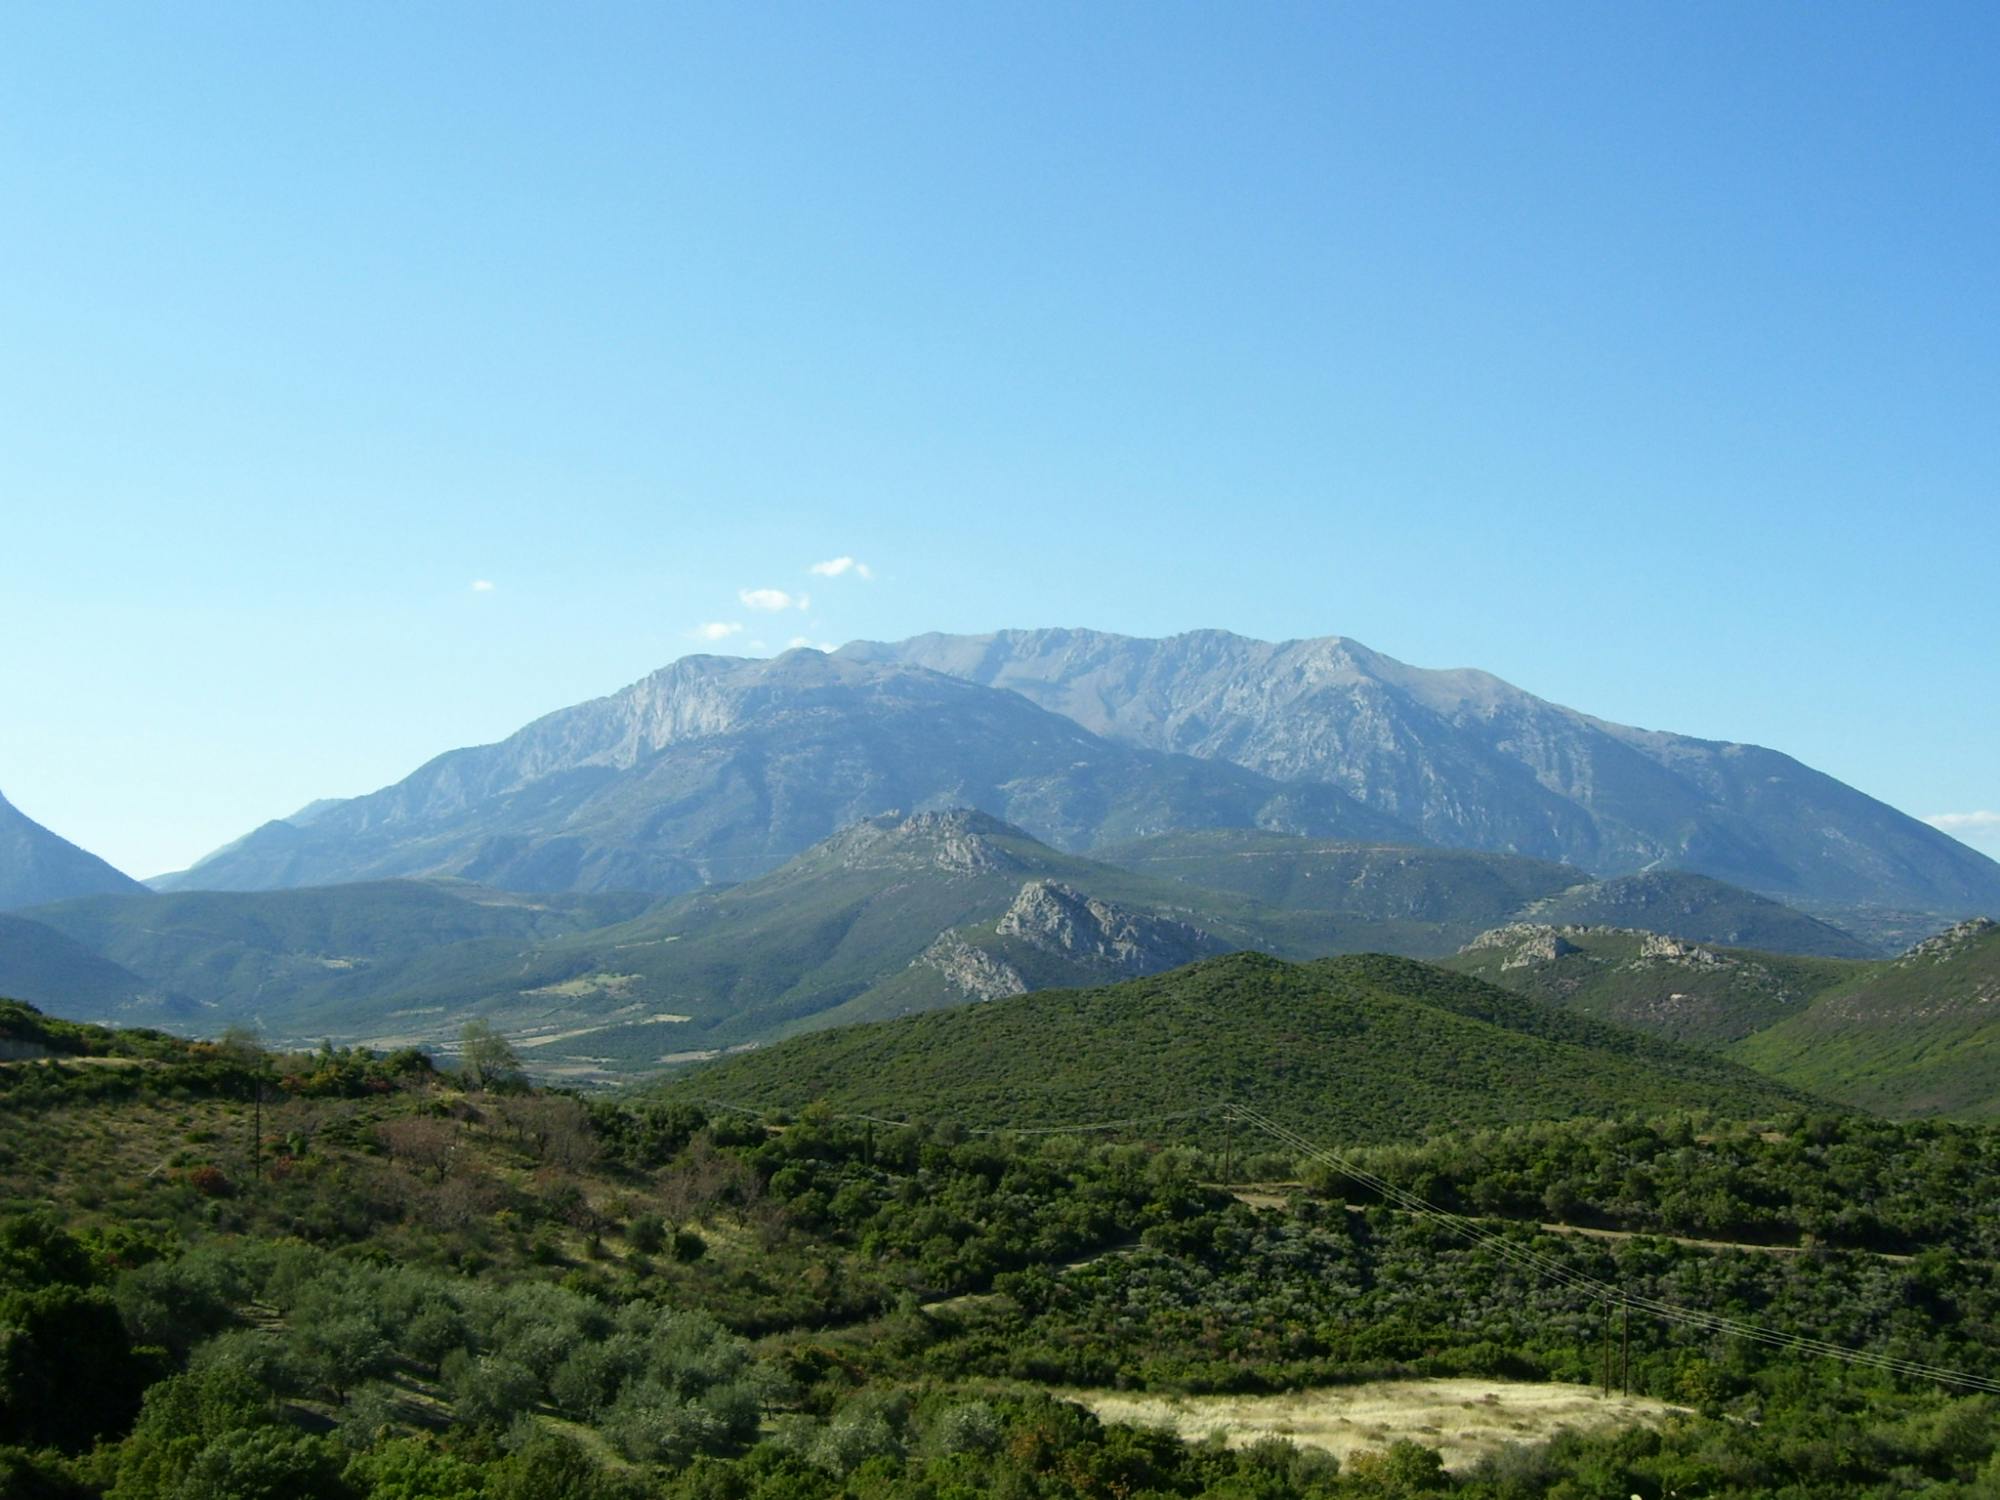 Privétour naar het nationale park Parnassos en Arachova vanuit Athene